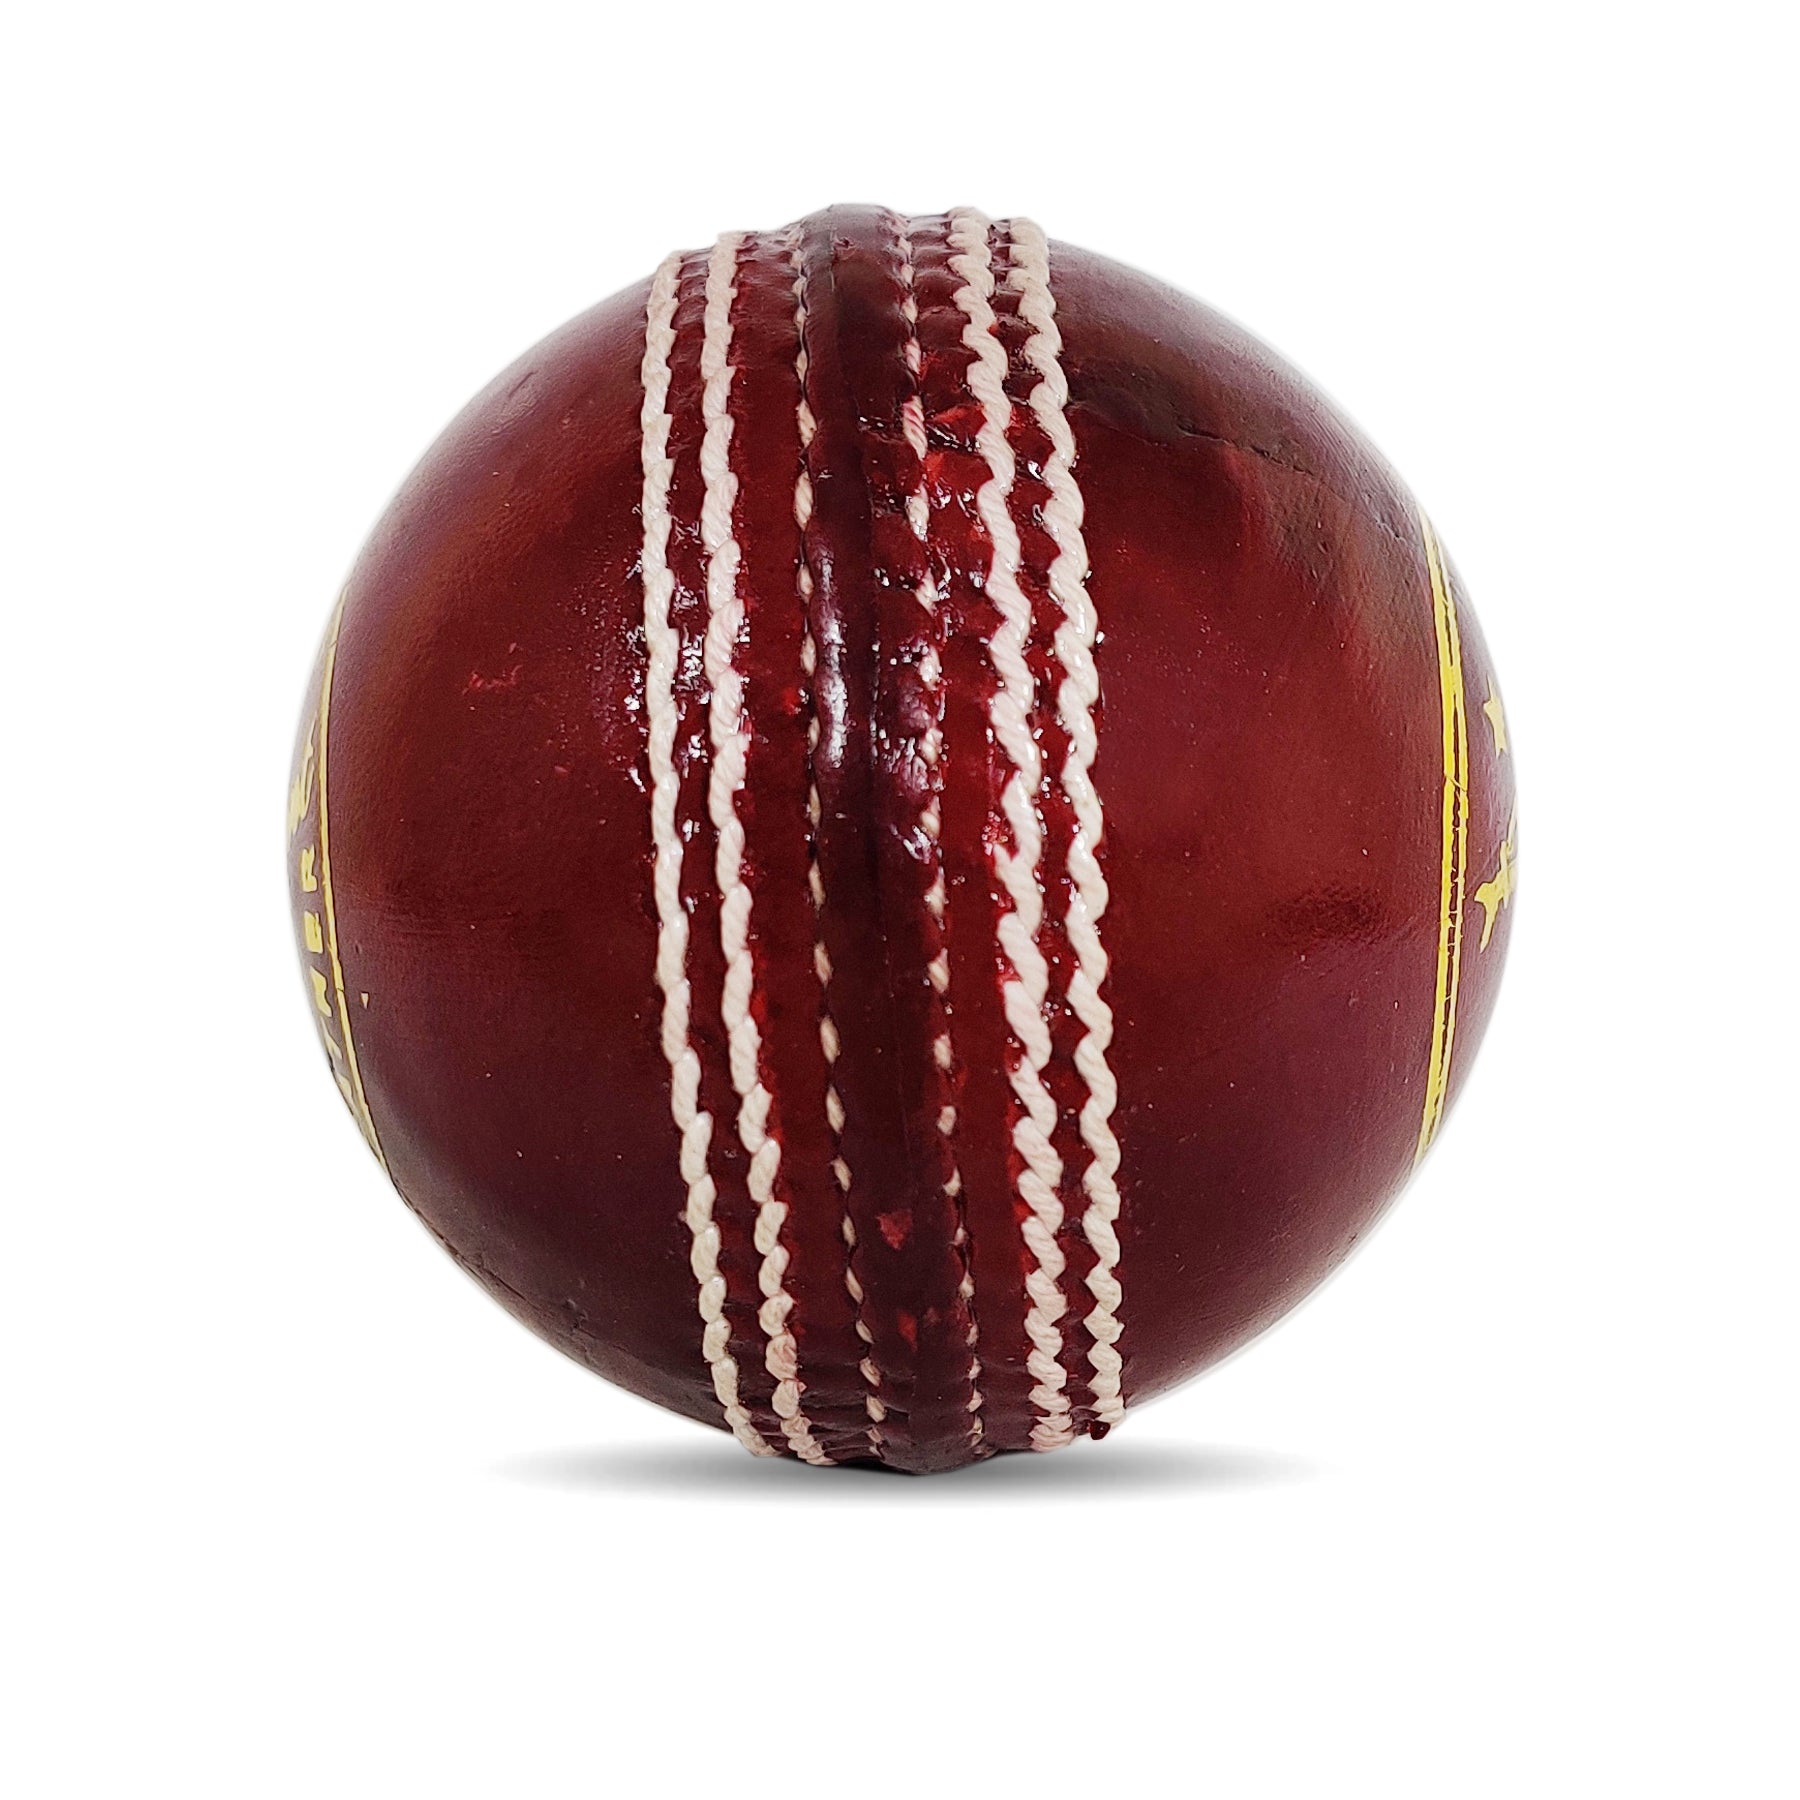 Prokick Tournament Four Piece Leather Cricket Ball, 1Pc (Red) - Best Price online Prokicksports.com